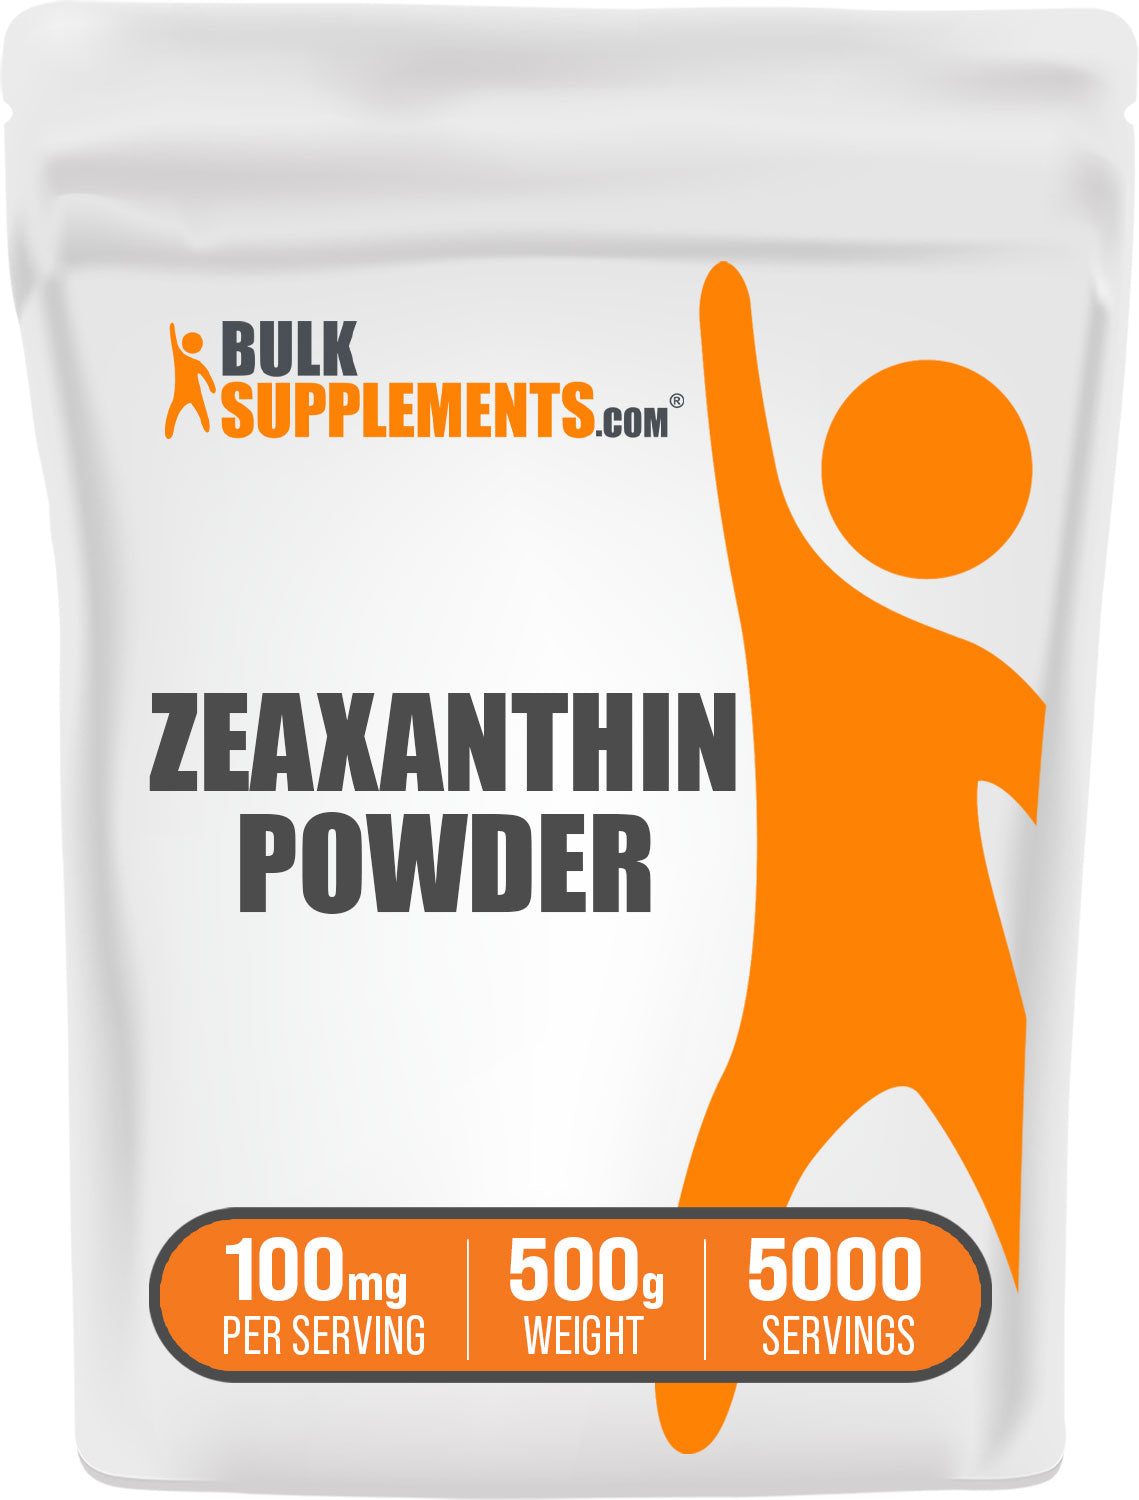 BulkSupplements Zeaxanthin Powder 500g bag